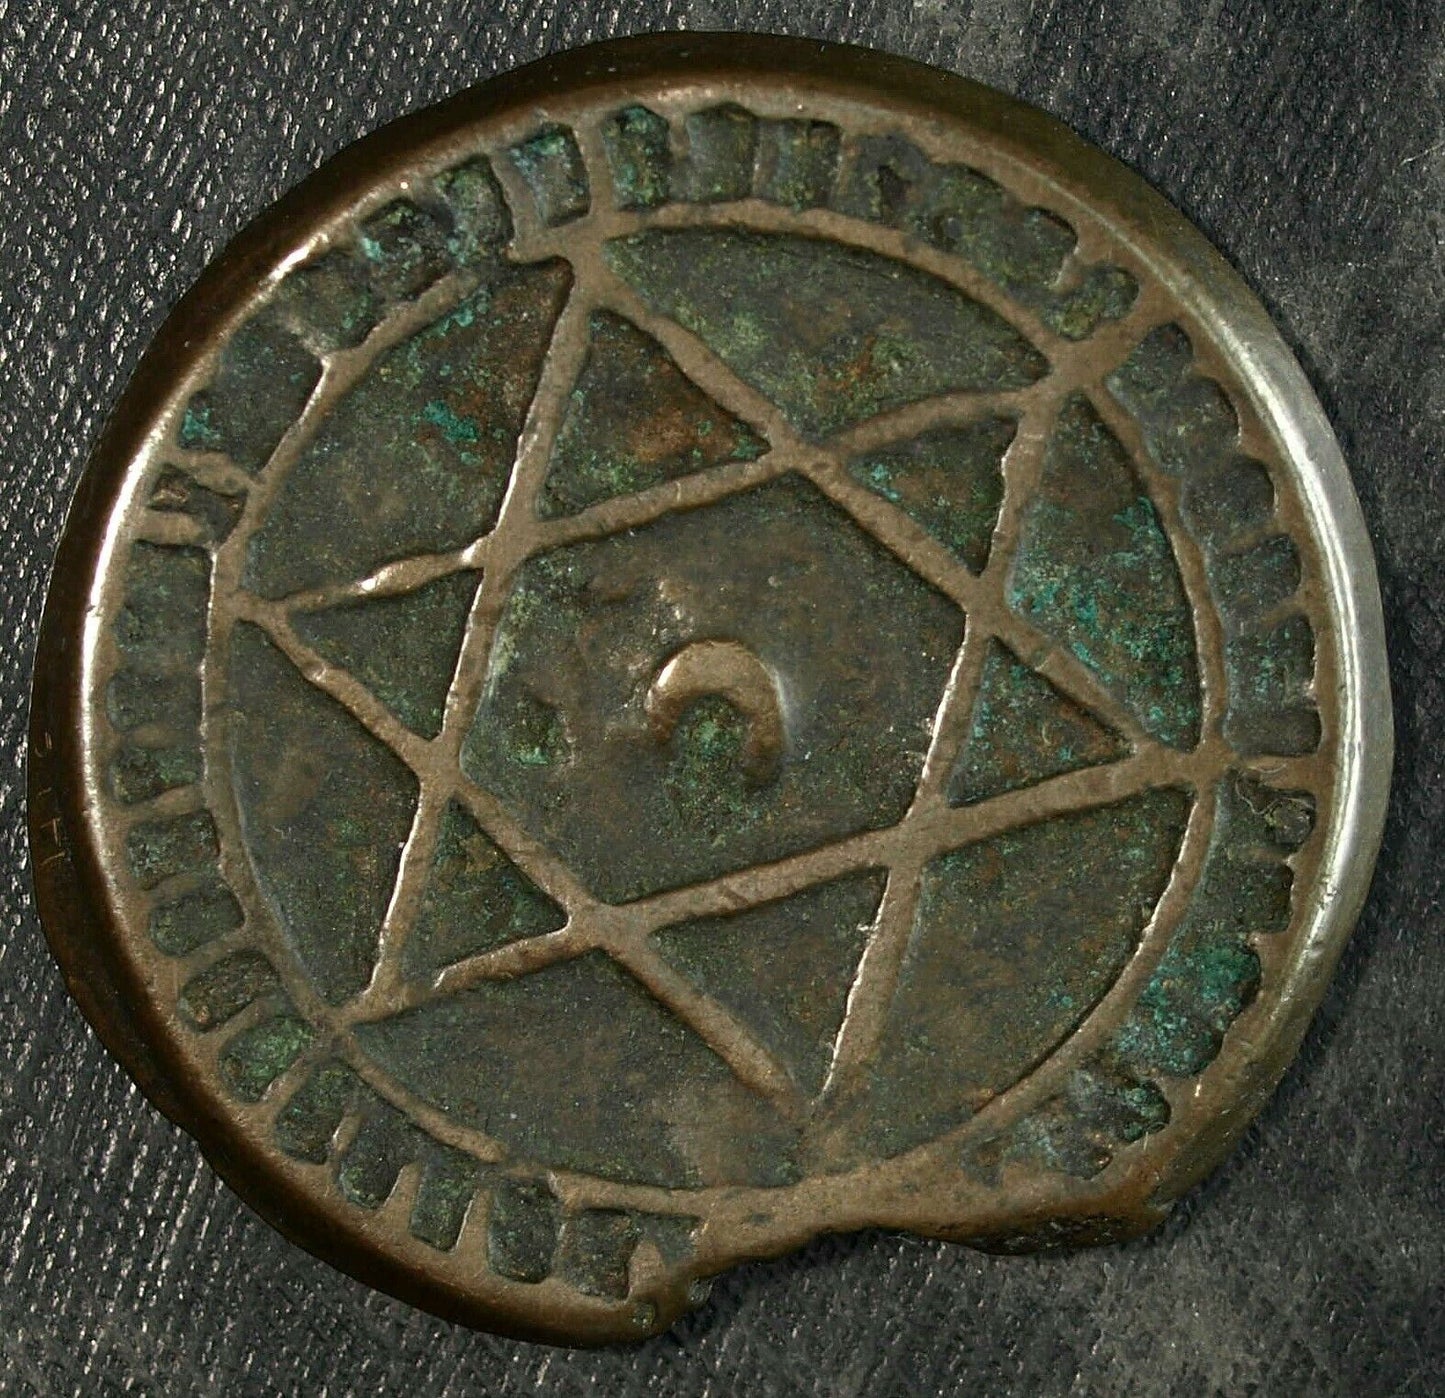 Morocco Bronze  4 Falus 1285 AH. 1868 AD. Seal of Solomon Sidi Mohamme IV ☆☆